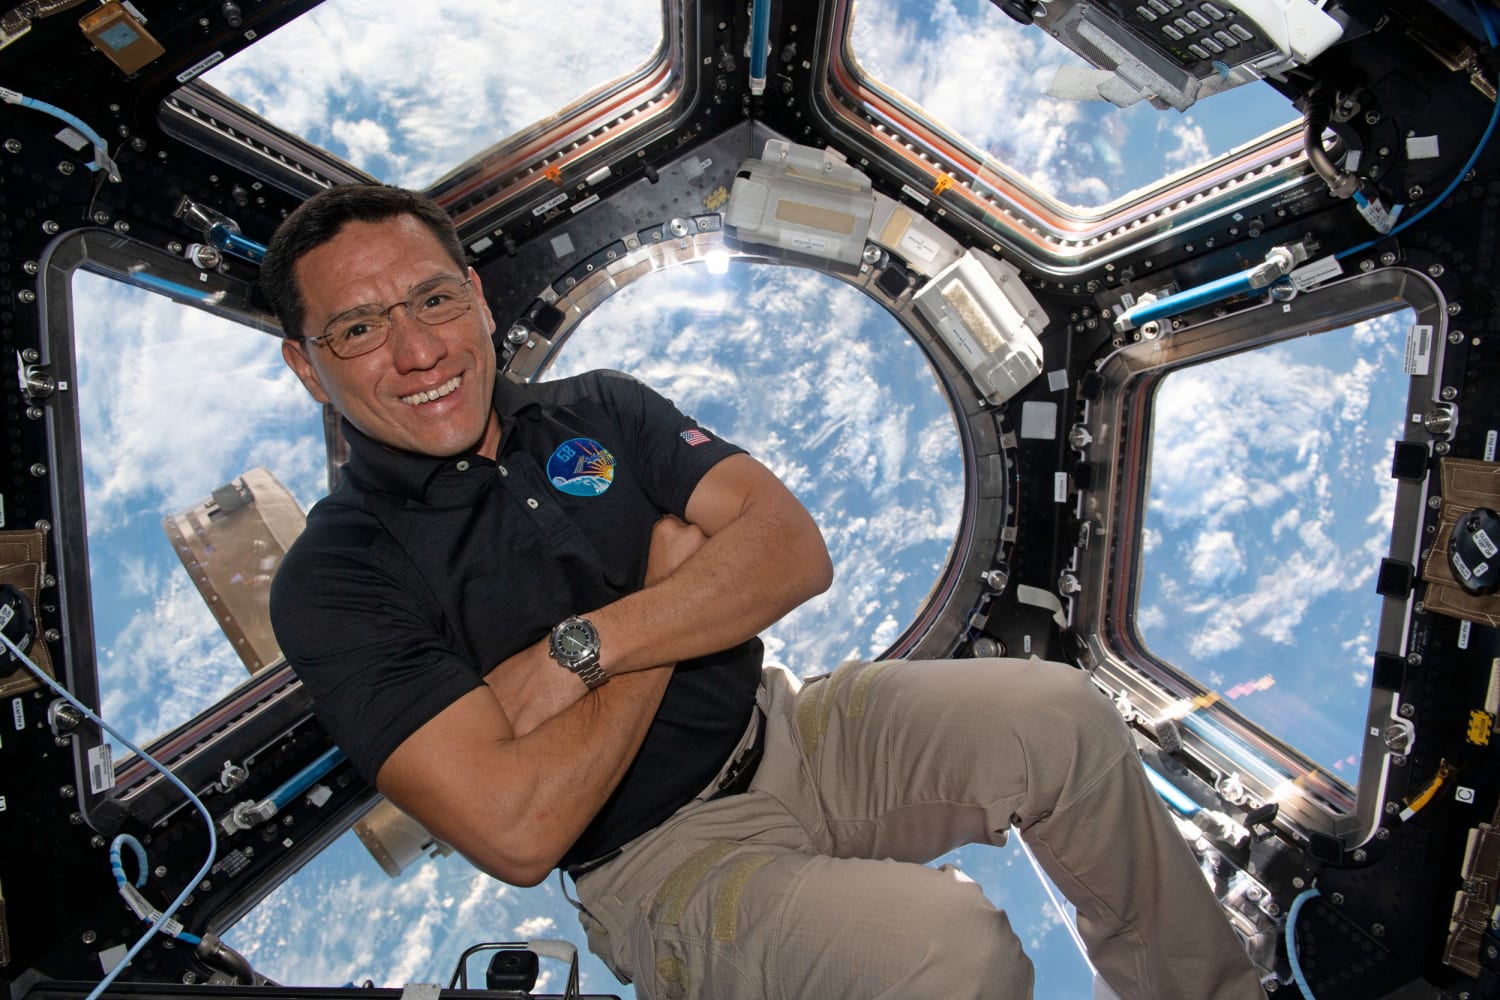 NASA astronaut Frank Rubio breaks U.S. record for longest spaceflight